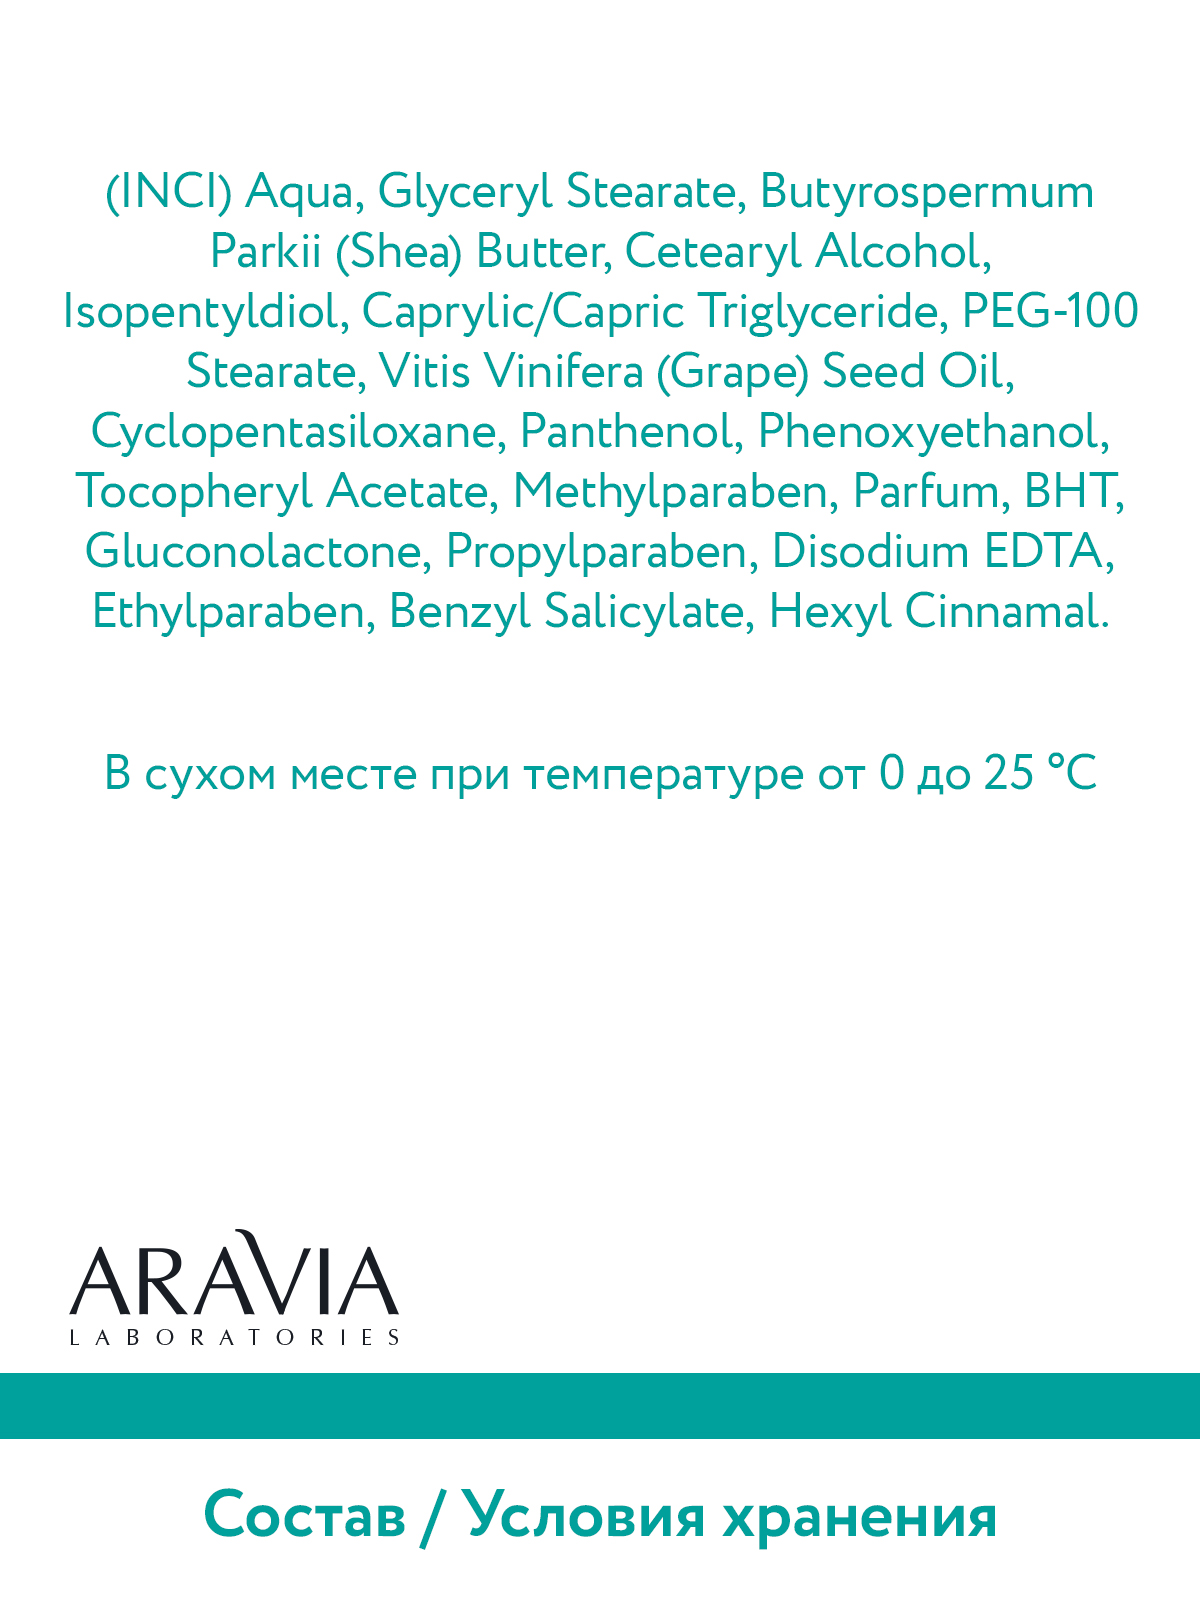 Крем для лица ARAVIA Laboratories балансирующий с РНА-кислотами PHA-Active Balance Cream 50 мл - фото 11